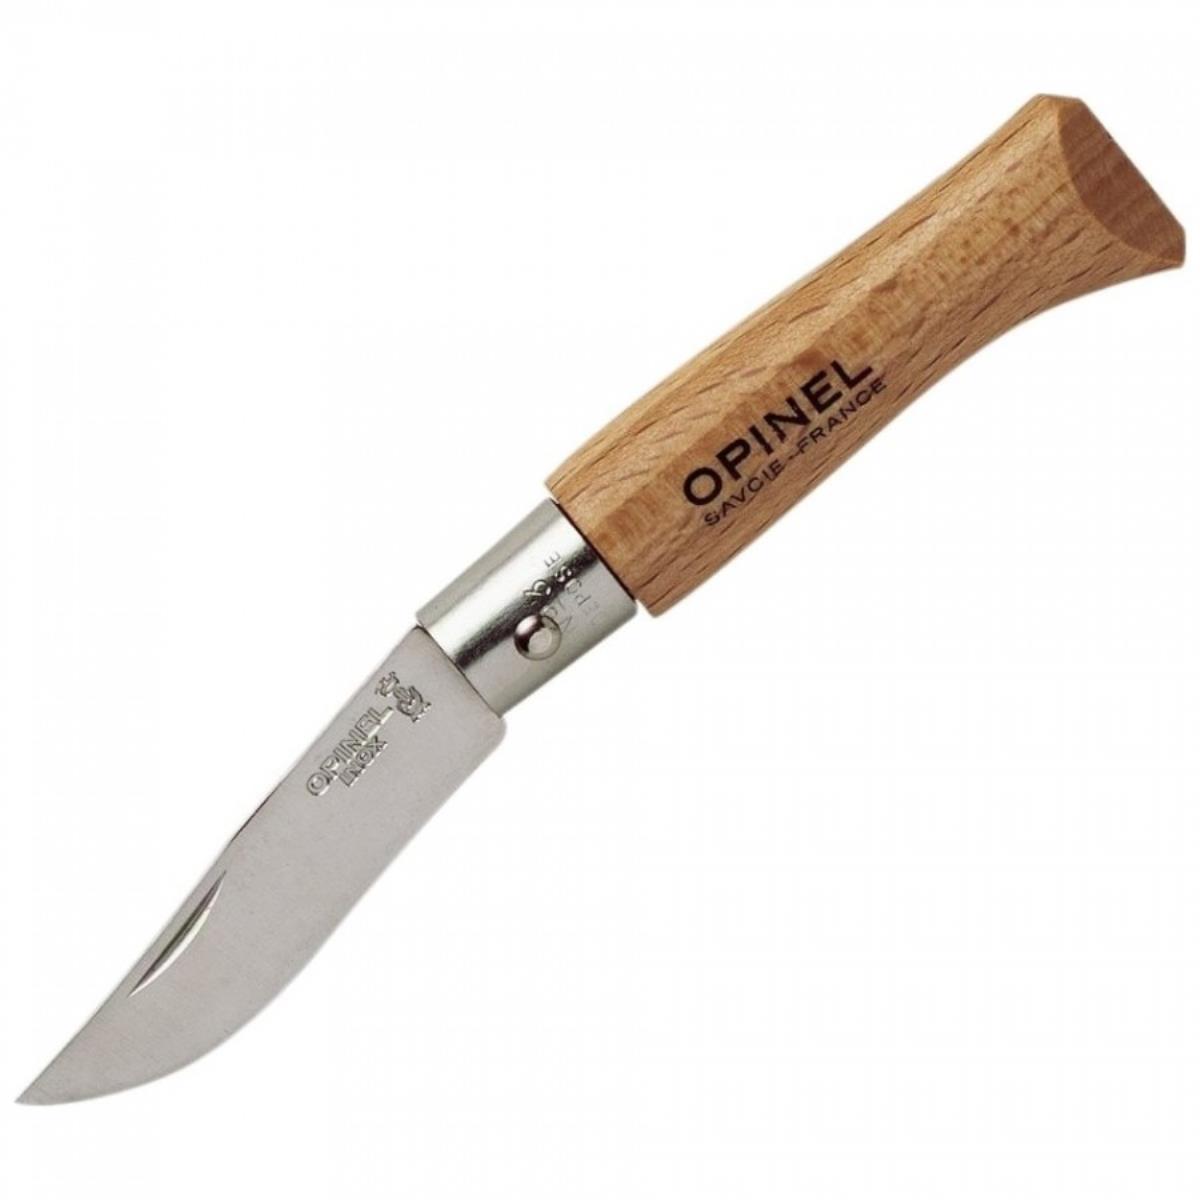 Нож складной №3 VRI Tradition Inox (нерж. сталь, рукоять бук, длина клинка 4 см) (0010712) OPINEL нож складной серая рукоять g10 сталь aus 8 bk01bo424 strike coyote boker